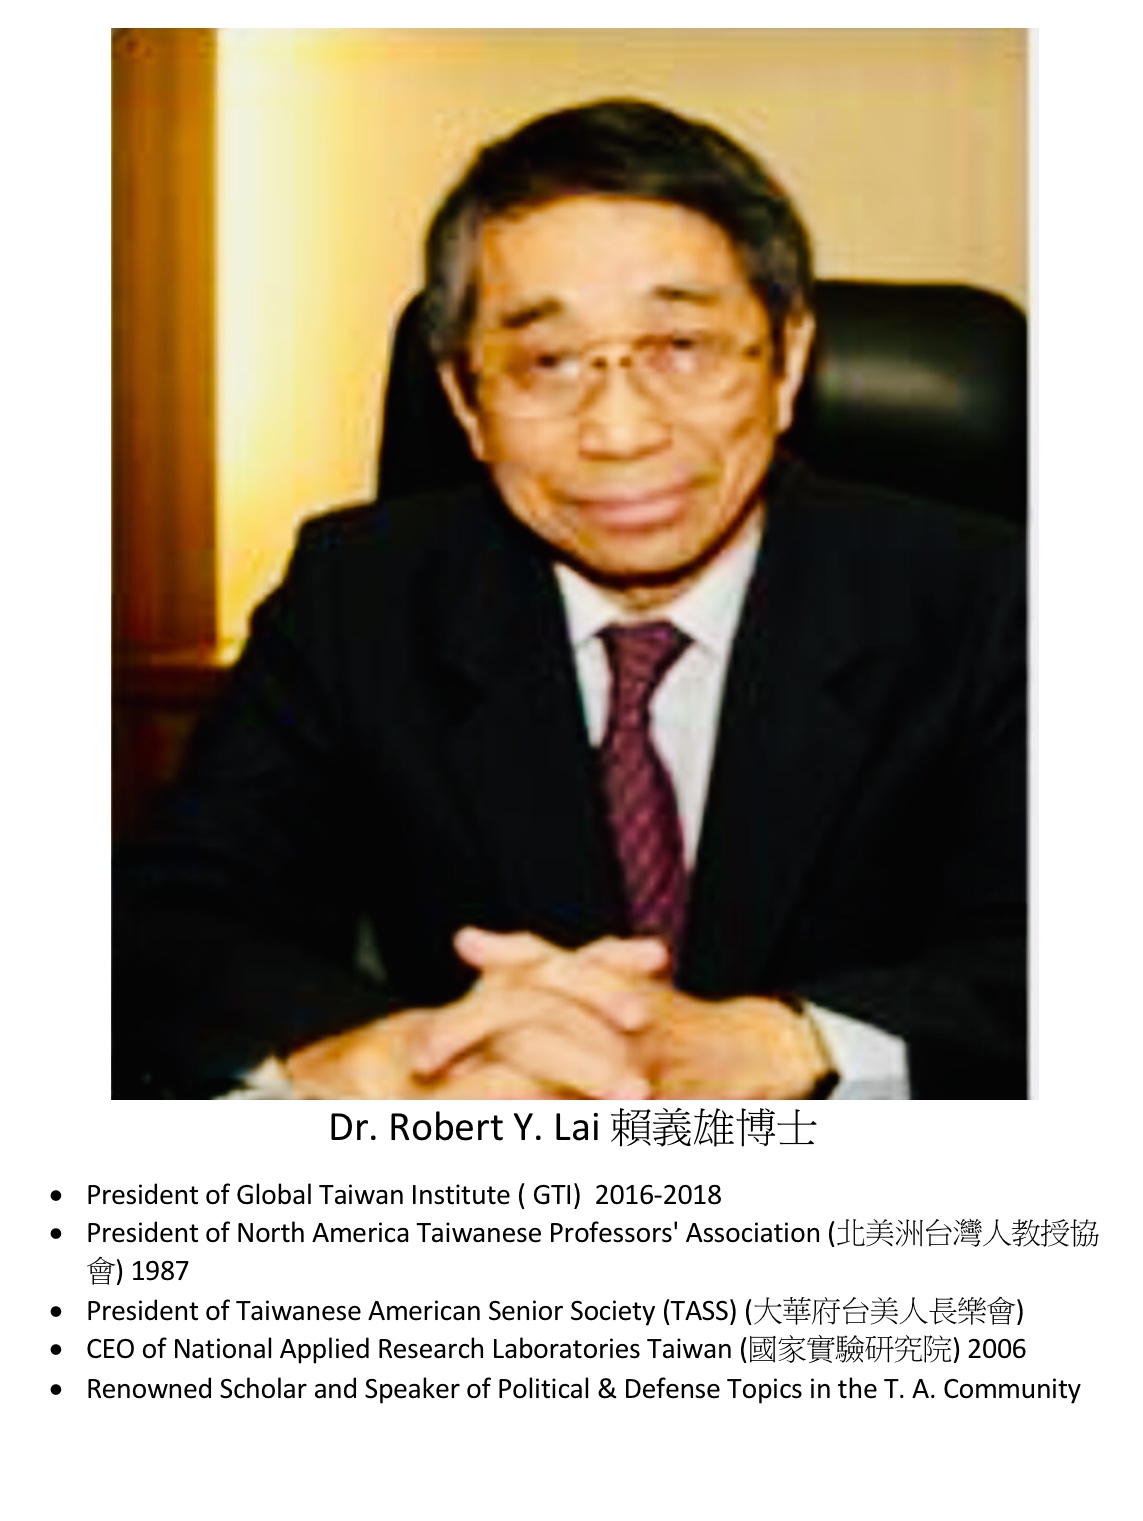 276. Dr. Robert Y. Lai 賴義雄博士